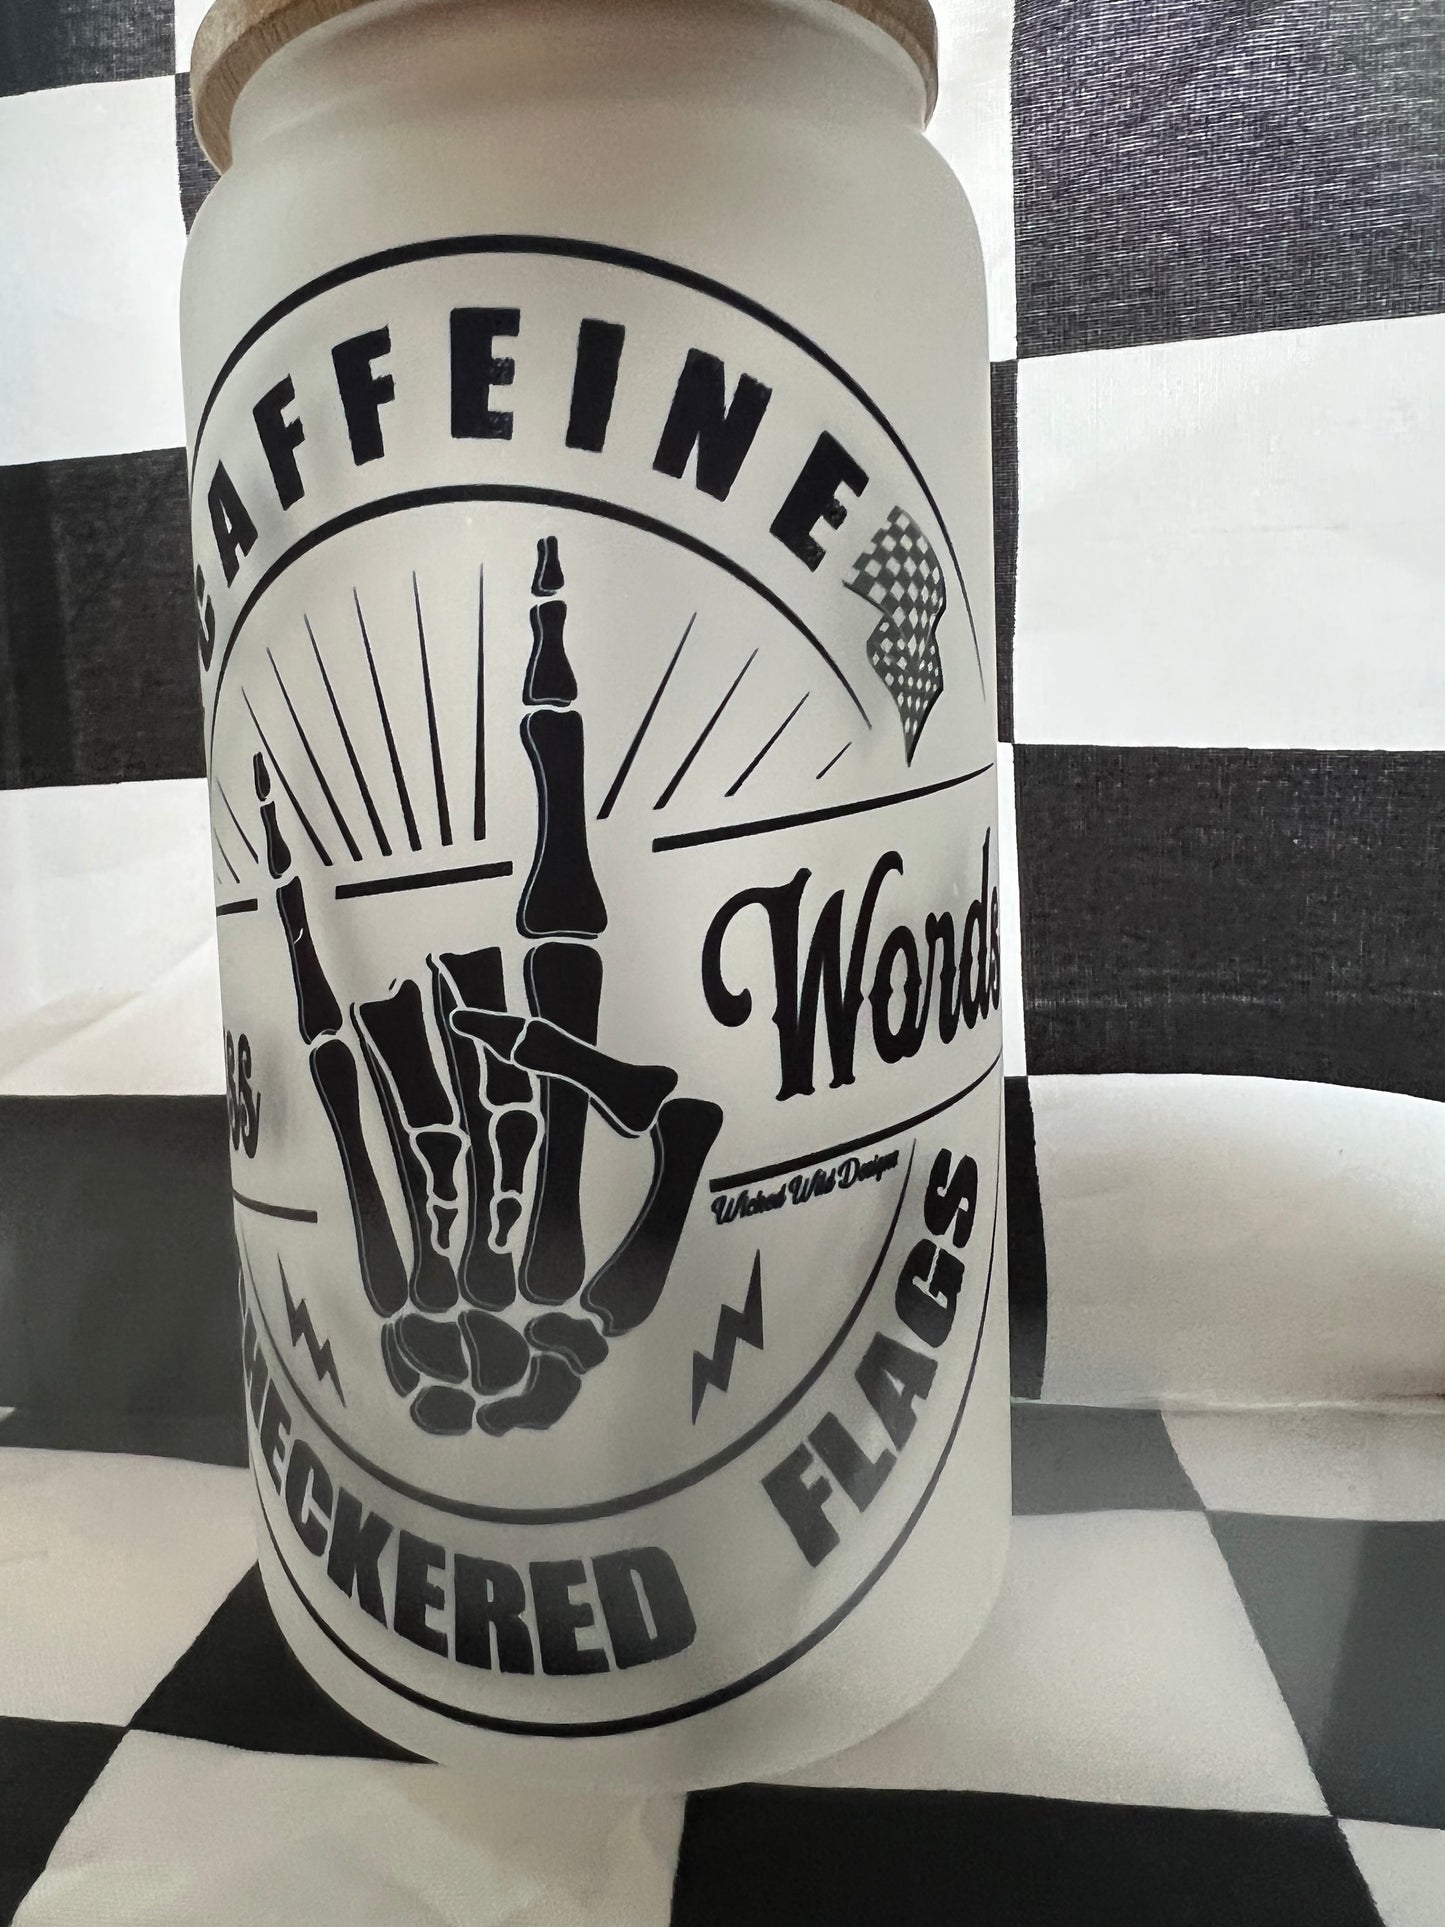 Caffeine, Cuss Words & Checkered Flags Sipper Jar